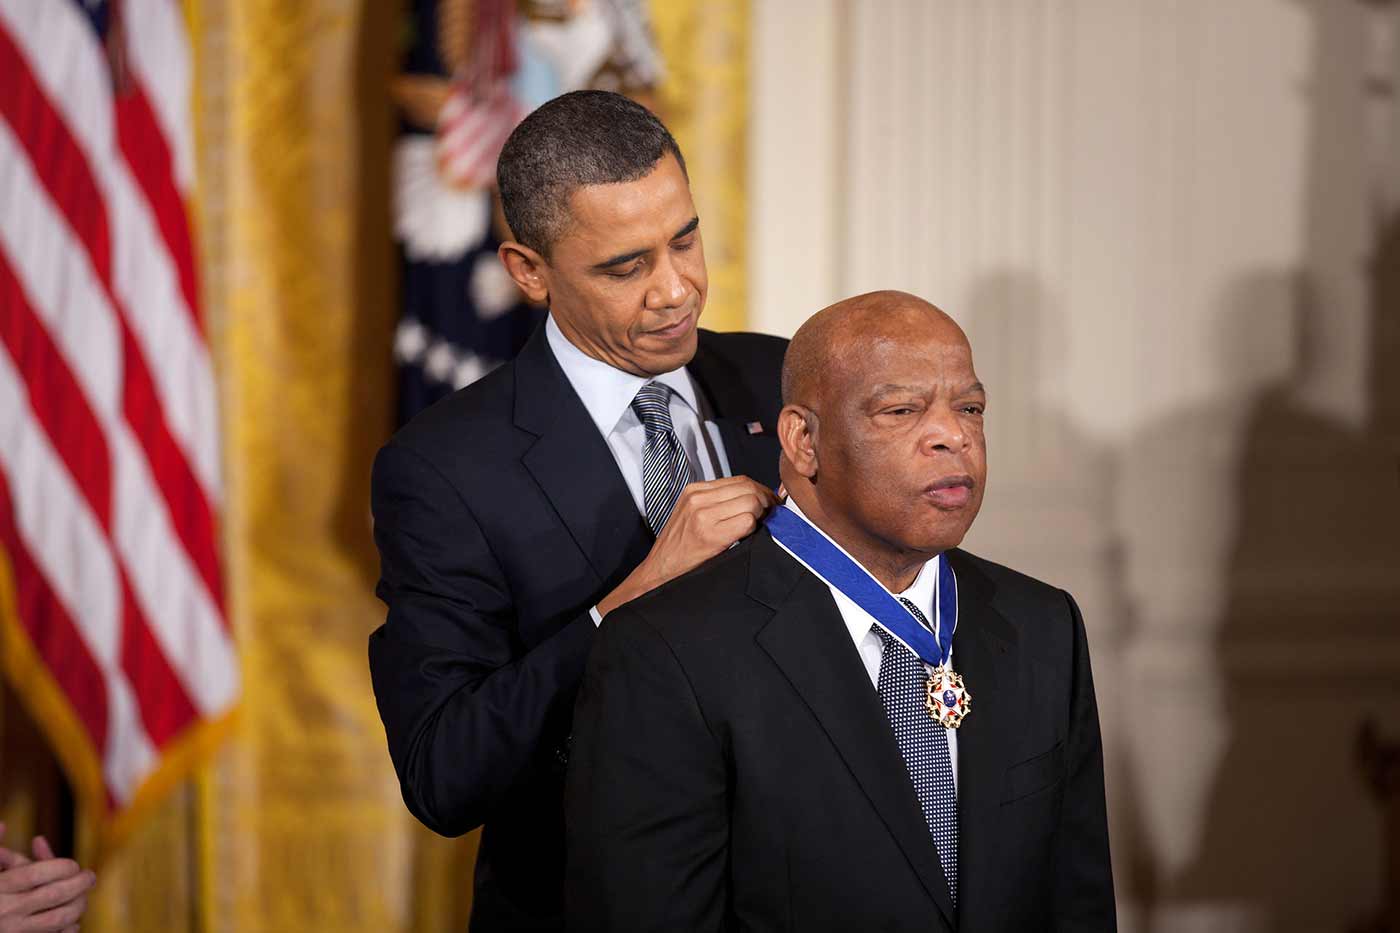 President Obama giving John Lewis the Medal of Freedom